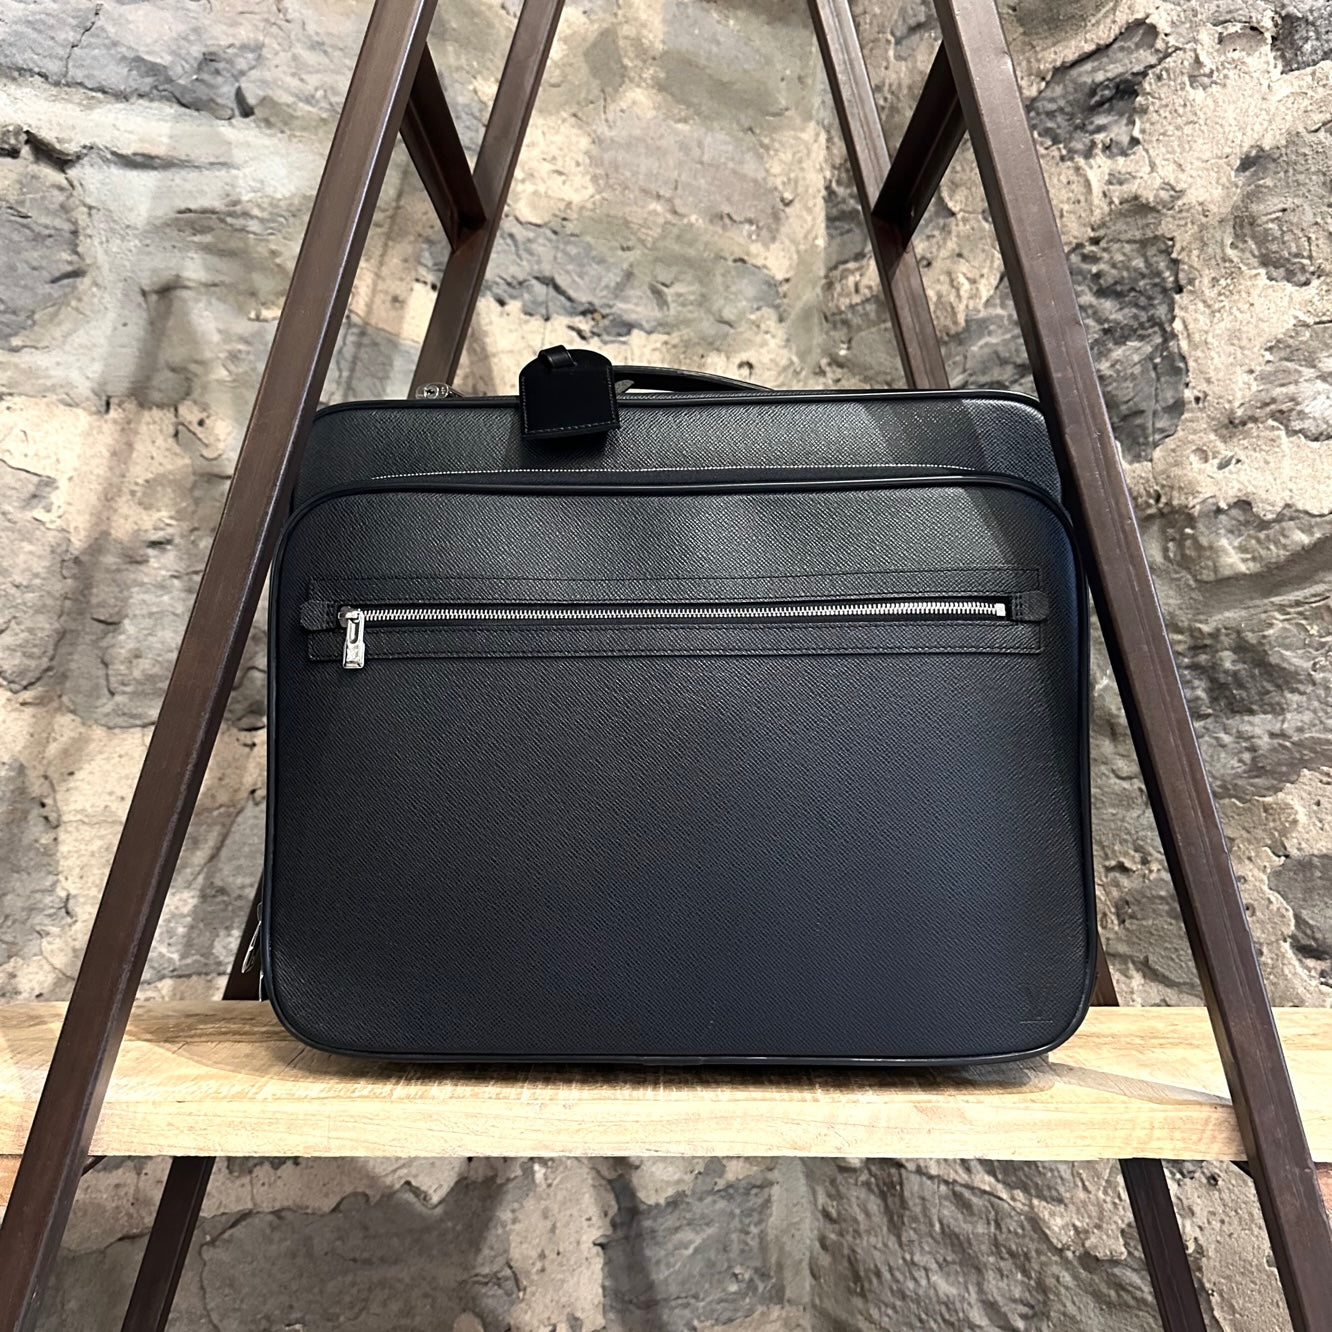 Pilot case leather travel bag Louis Vuitton Black in Leather - 29256794